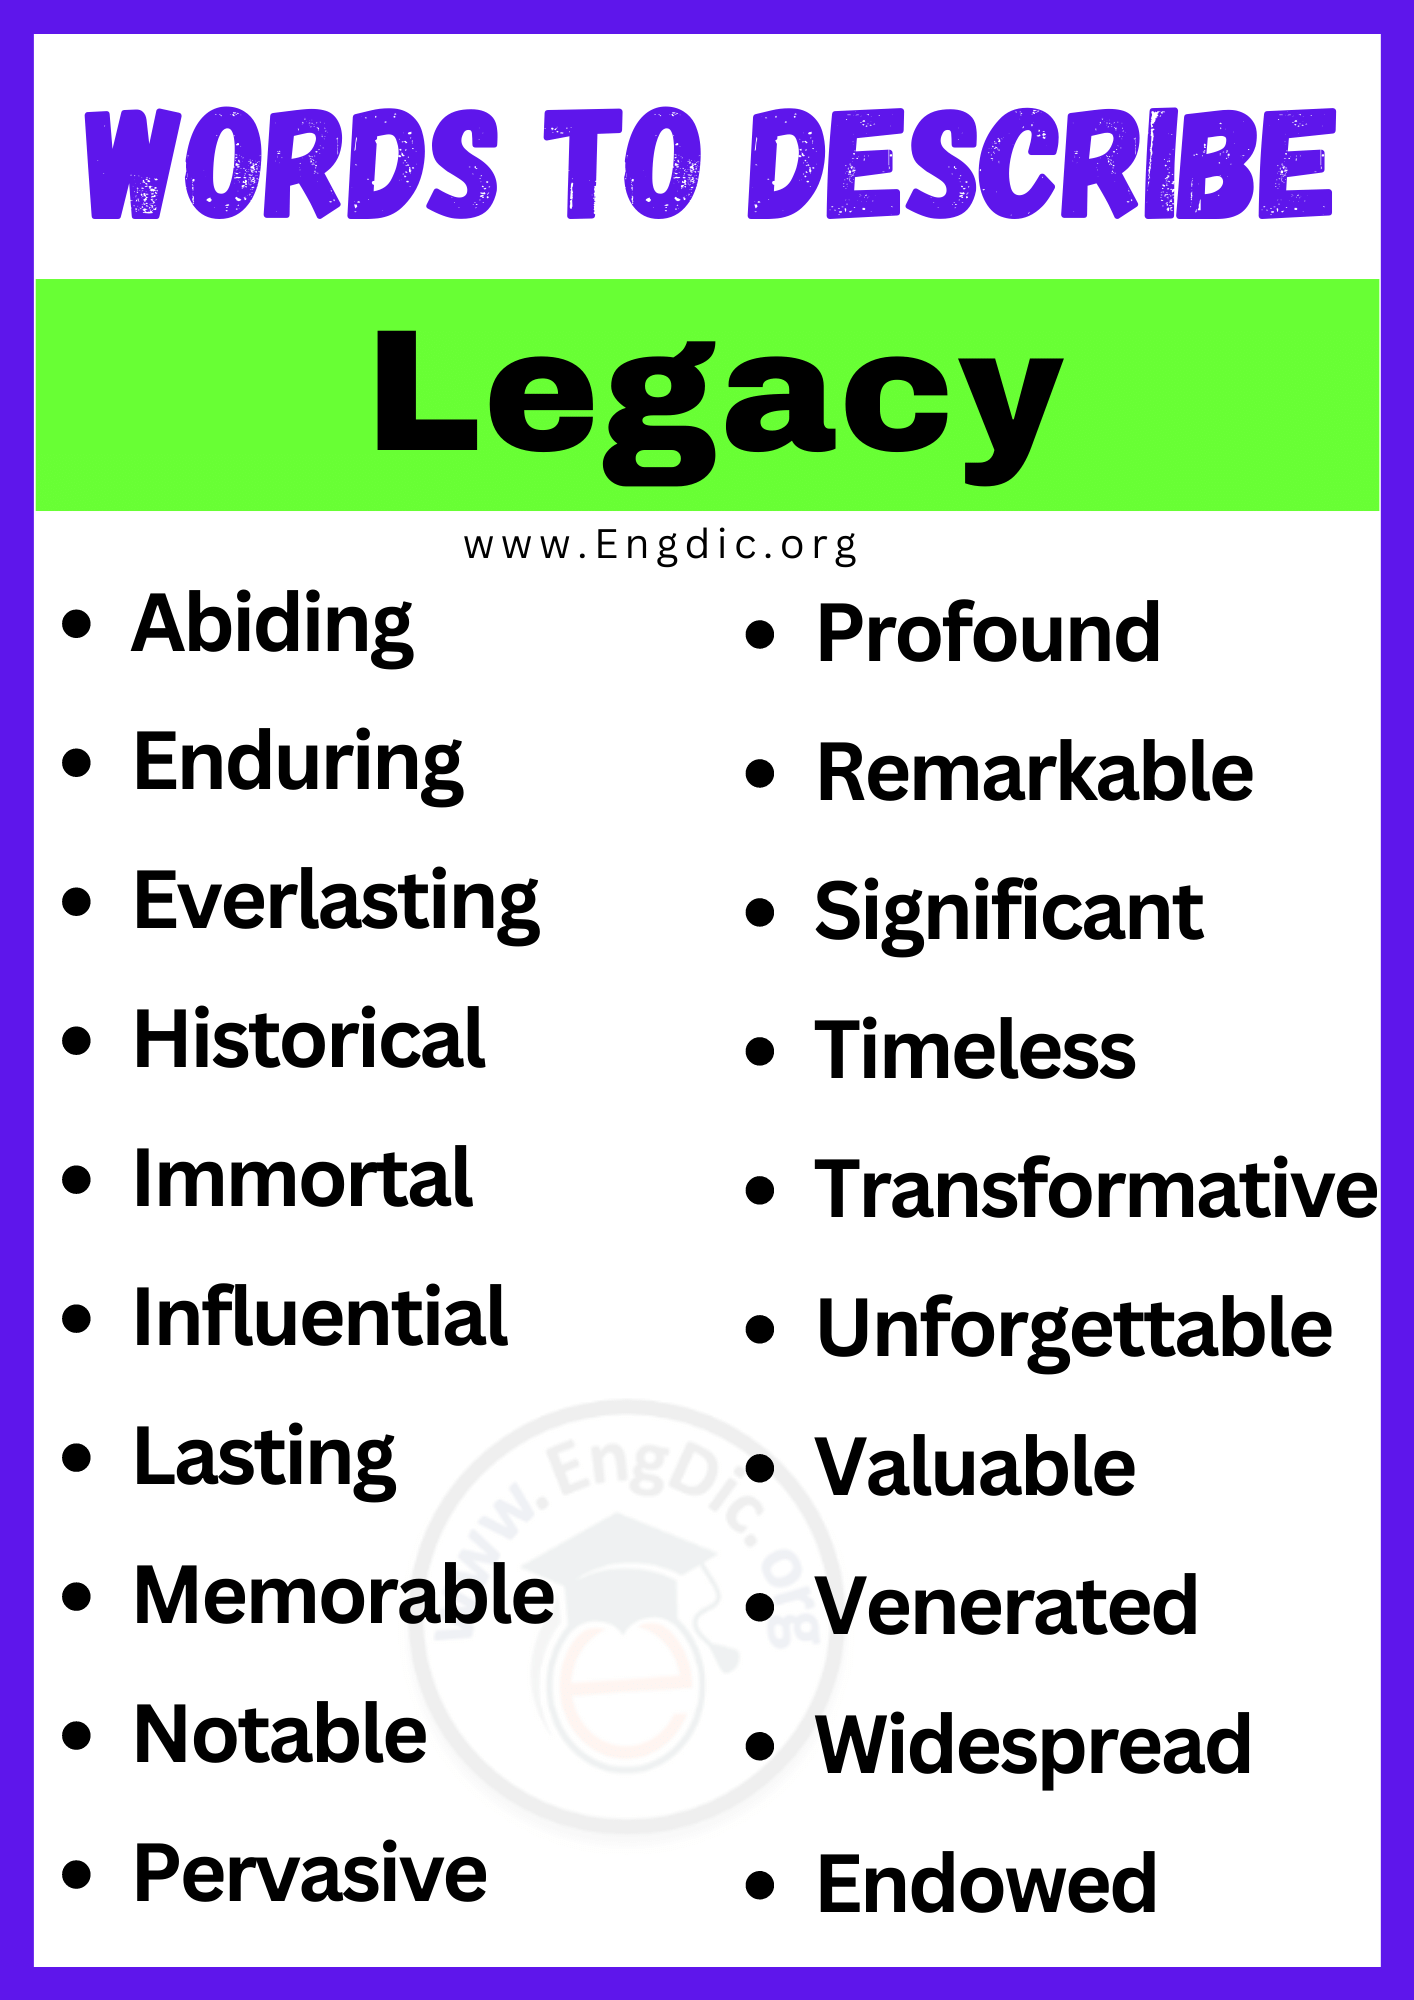 Words to Describe Legacy